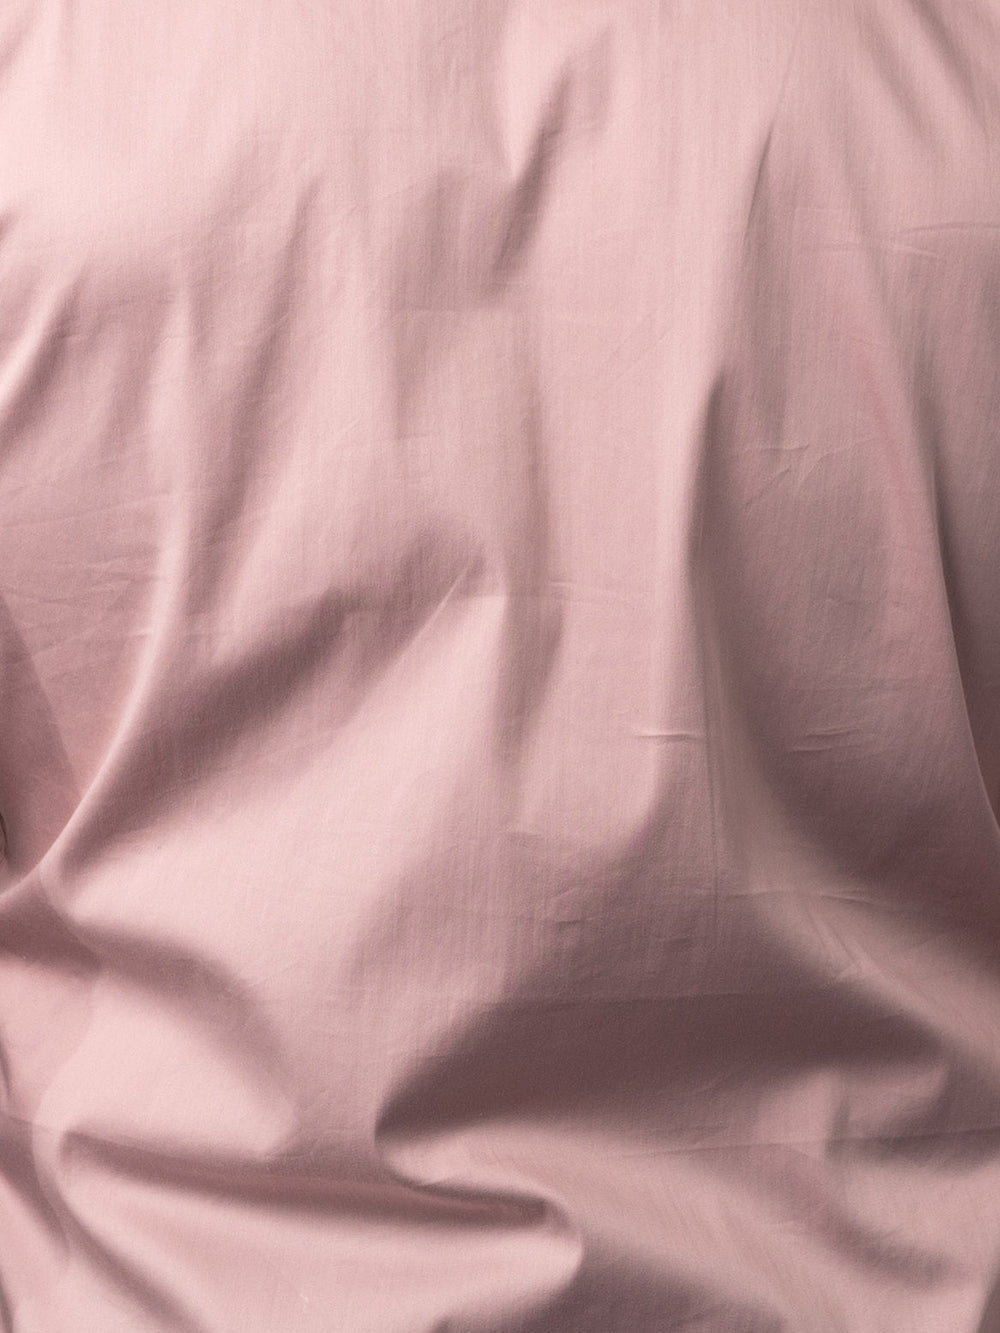 Maceoo Dress Shirt Long Sleeve Elacetin Pink